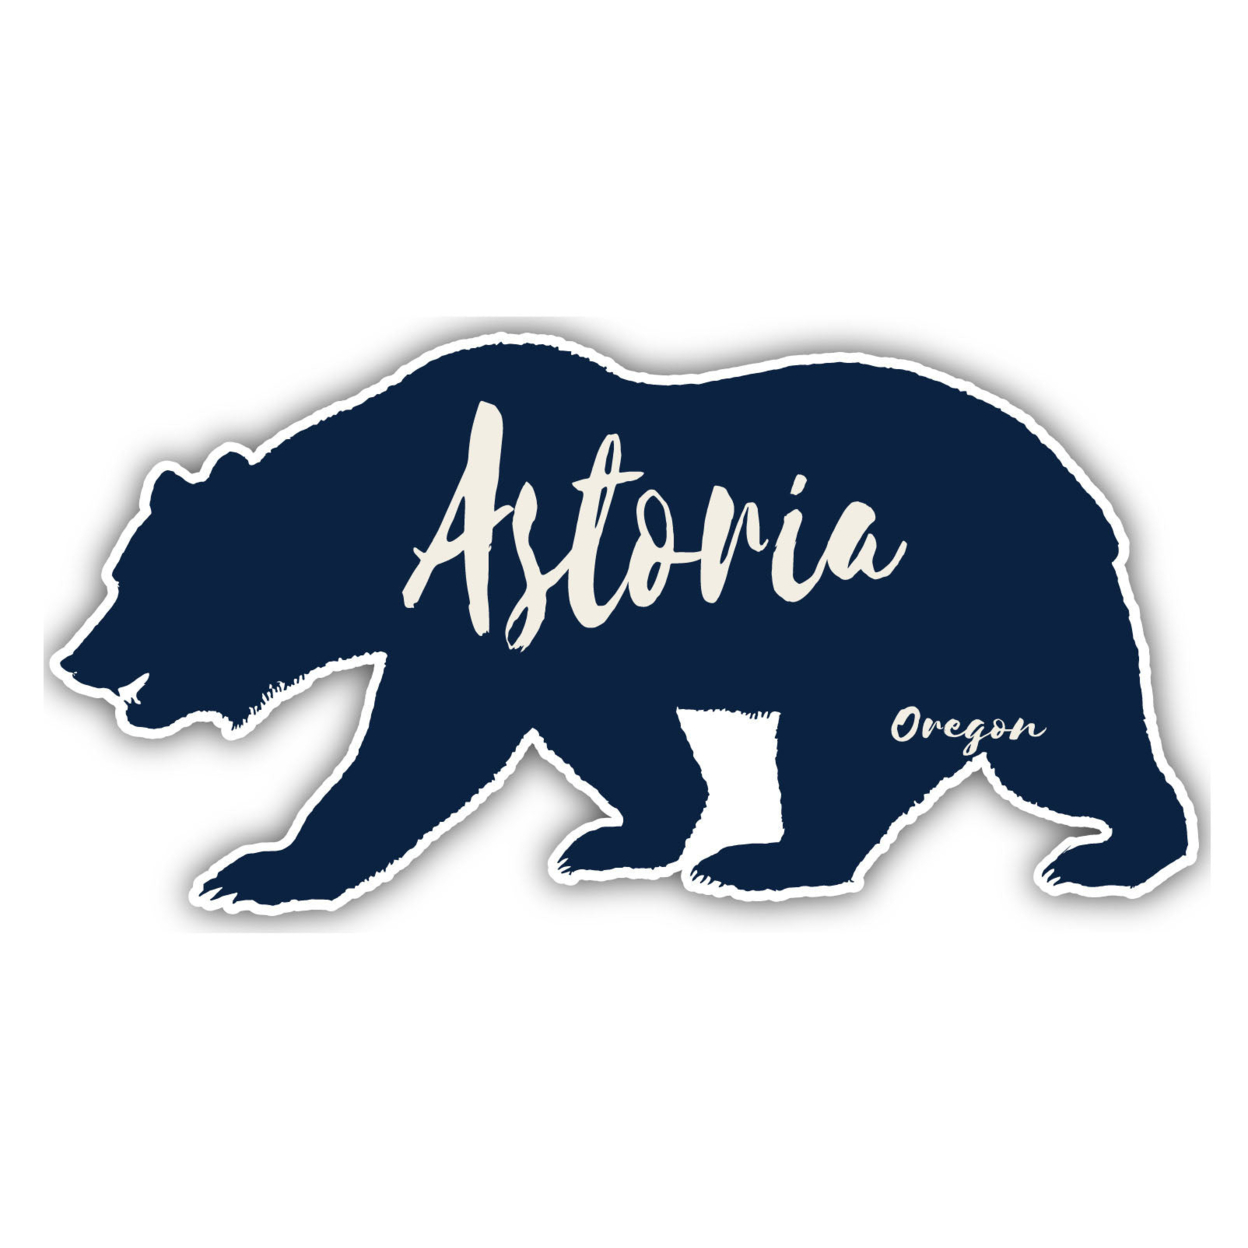 Astoria Oregon Souvenir Decorative Stickers (Choose Theme And Size) - Single Unit, 2-Inch, Tent